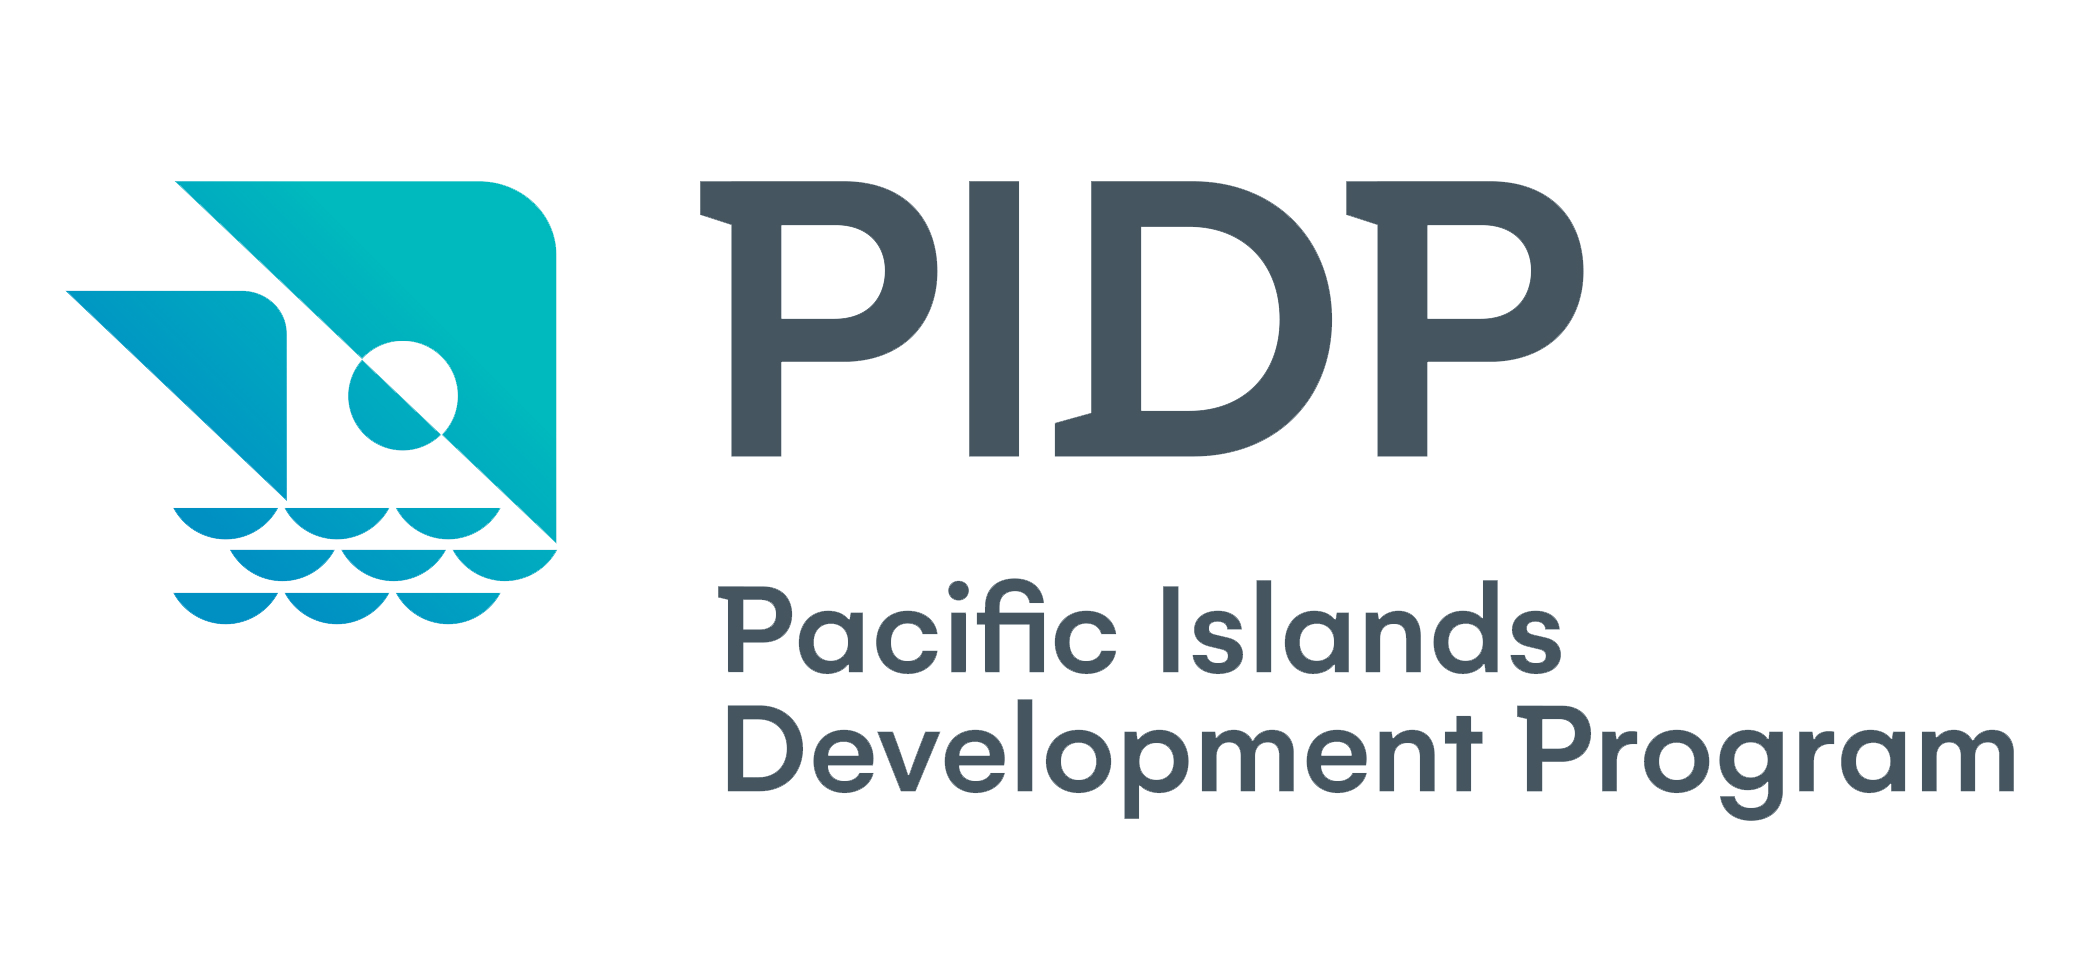 Pacific Islands Development Program